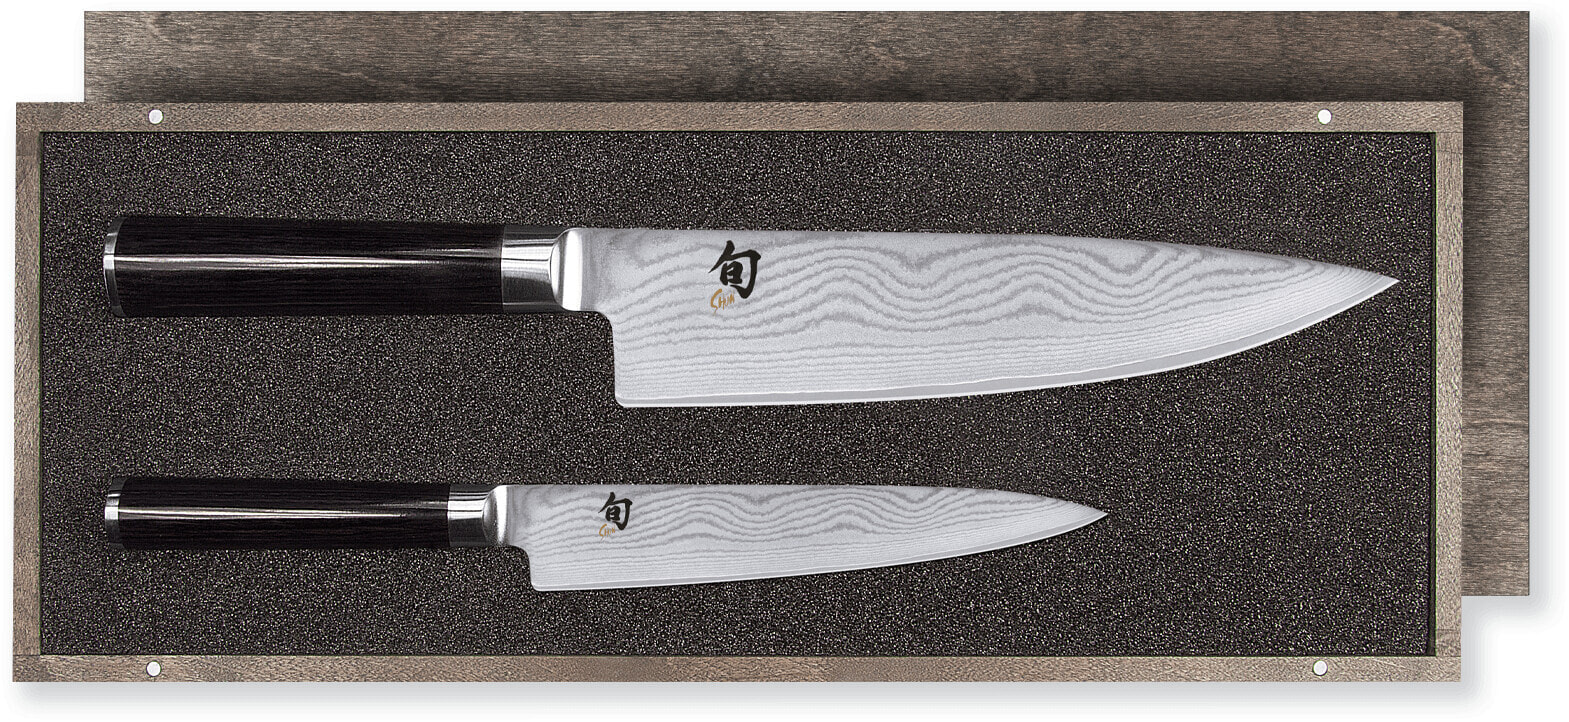 kai Europe kai DMS-220 - Knife/cutlery case set - Stainless steel - Wood - Stainless steel - Black - Japan